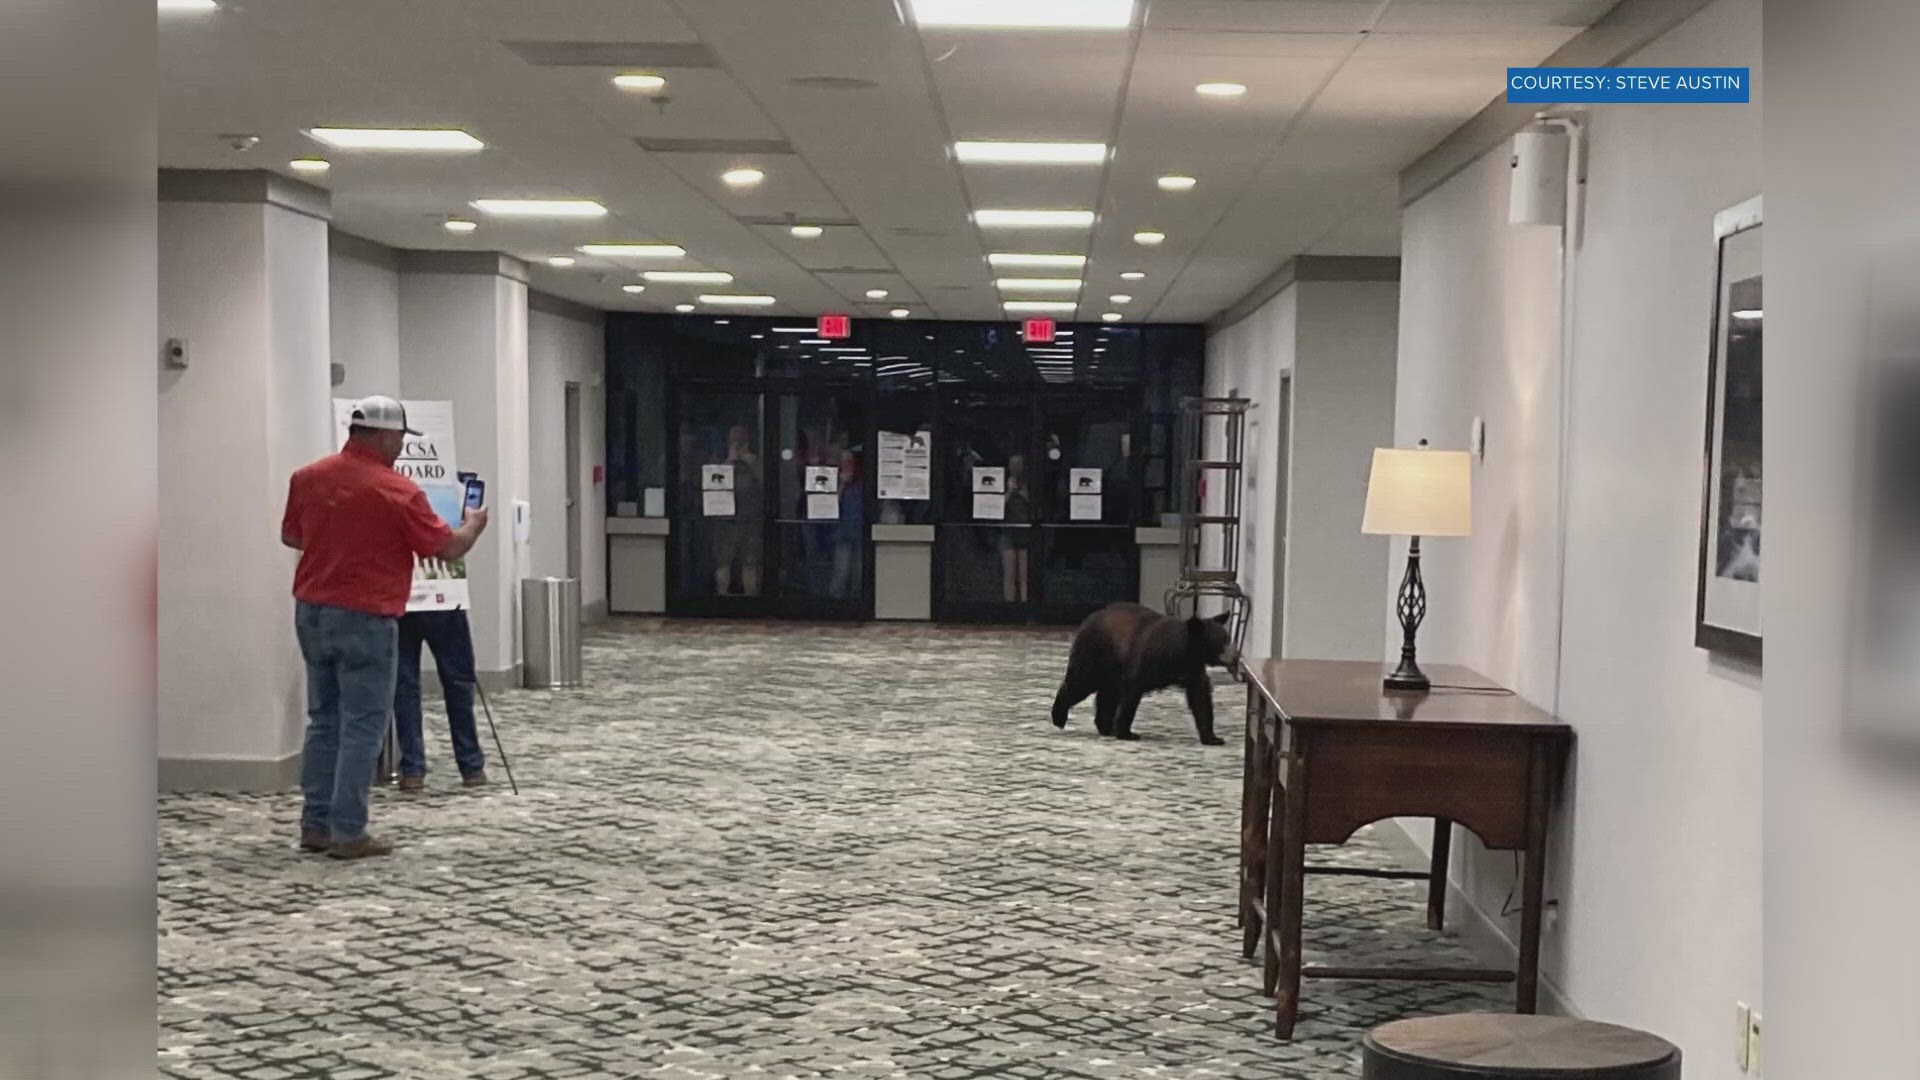 On Monday, a bear entered the Park Vista Hotel in downtown Gatlinburg.